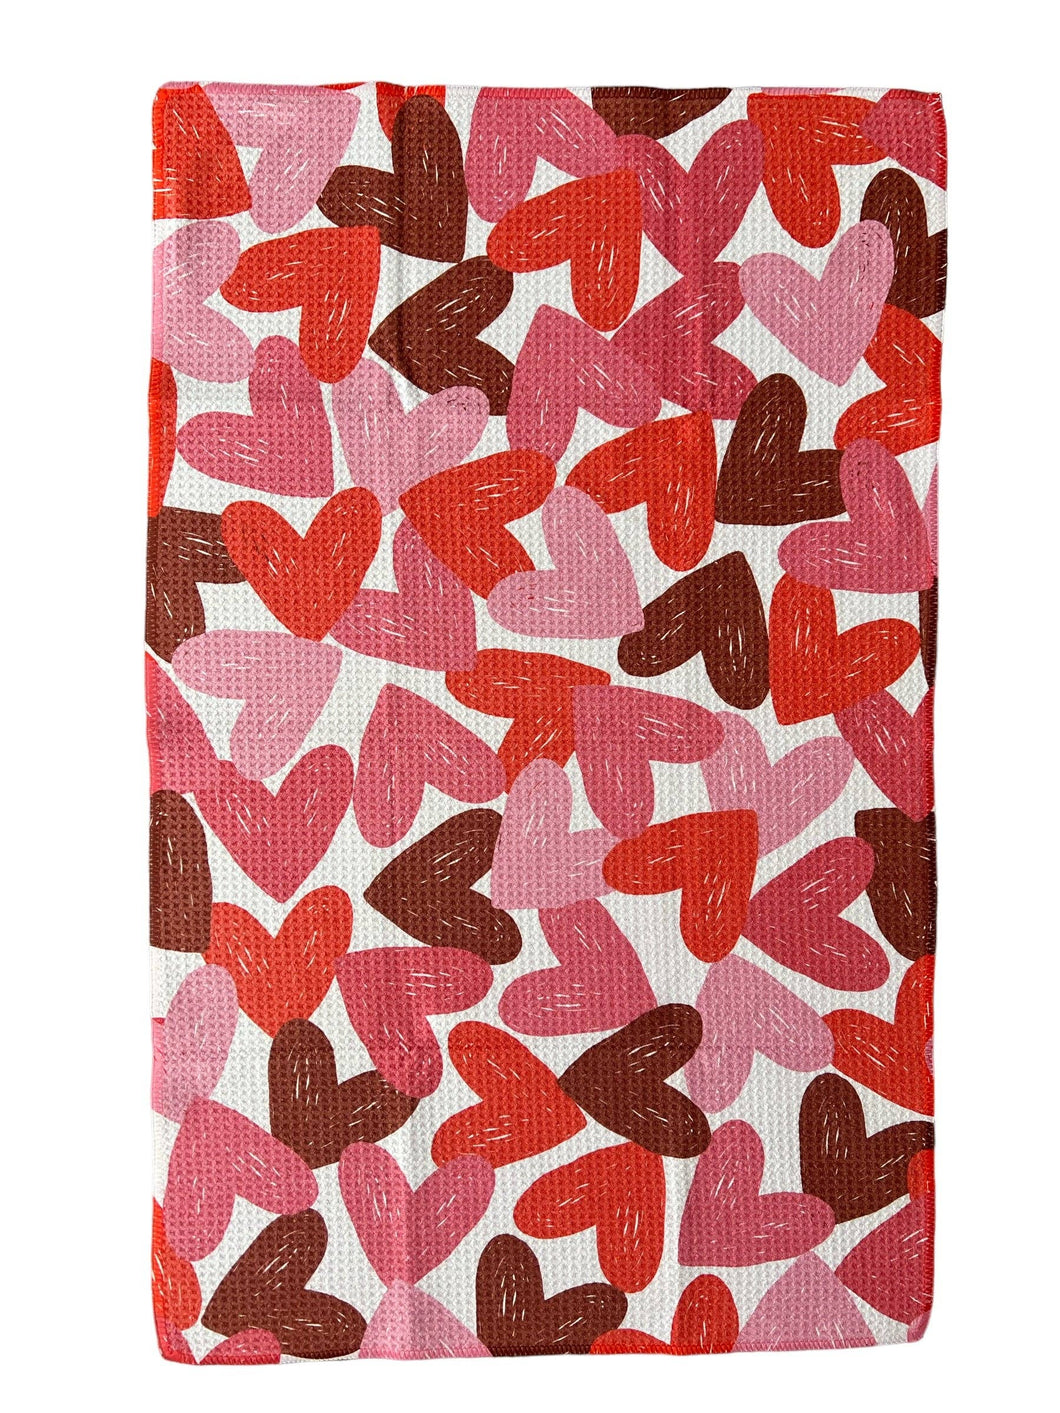 Hearts Hearts Hearts Tea Towel